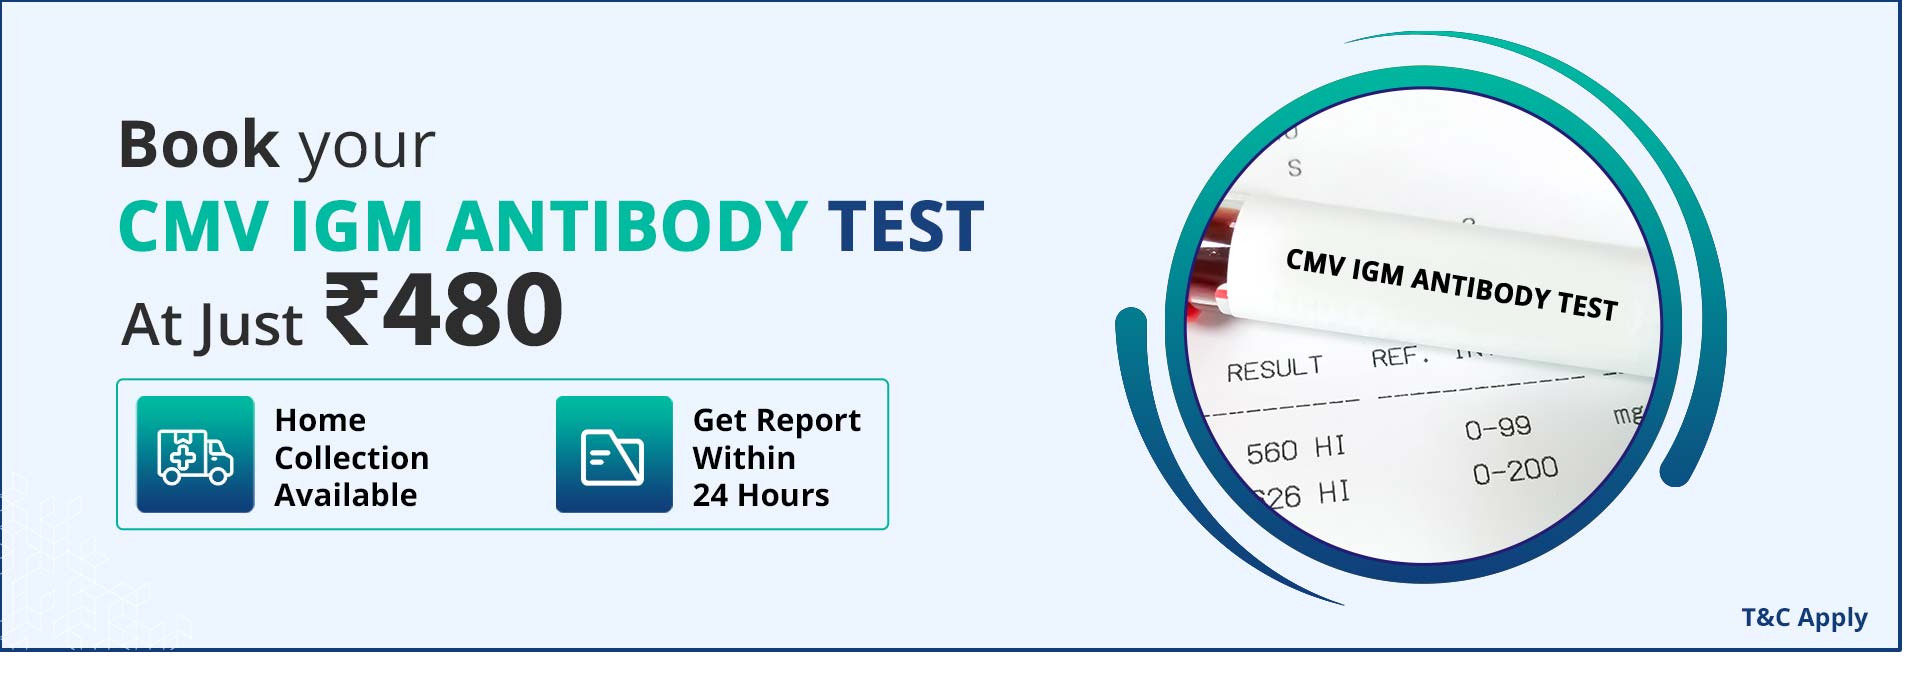 Cmv igm antibody test